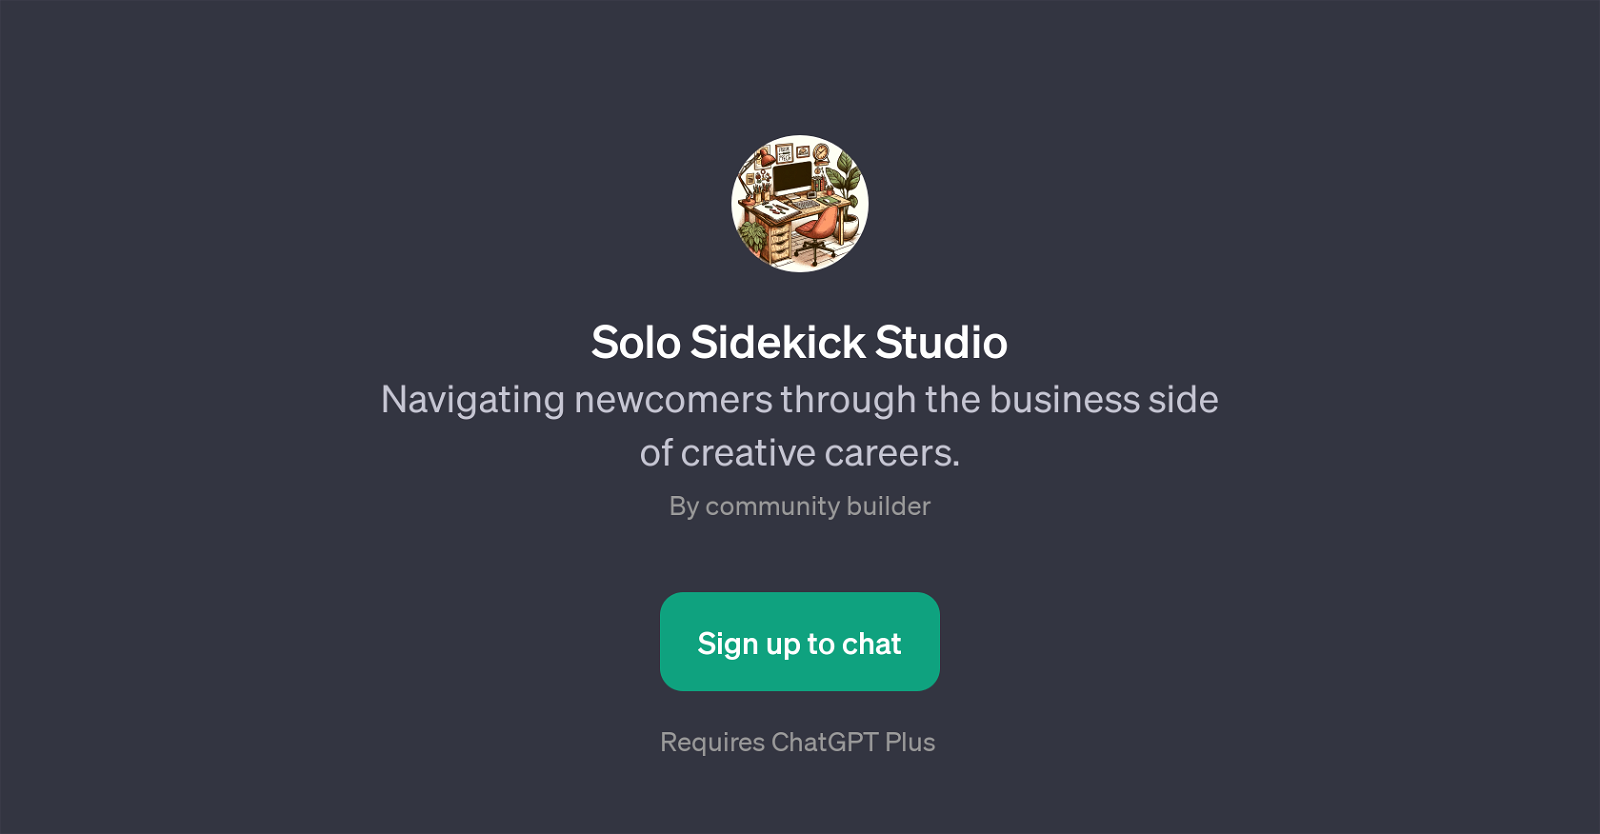 Solo Sidekick Studio website